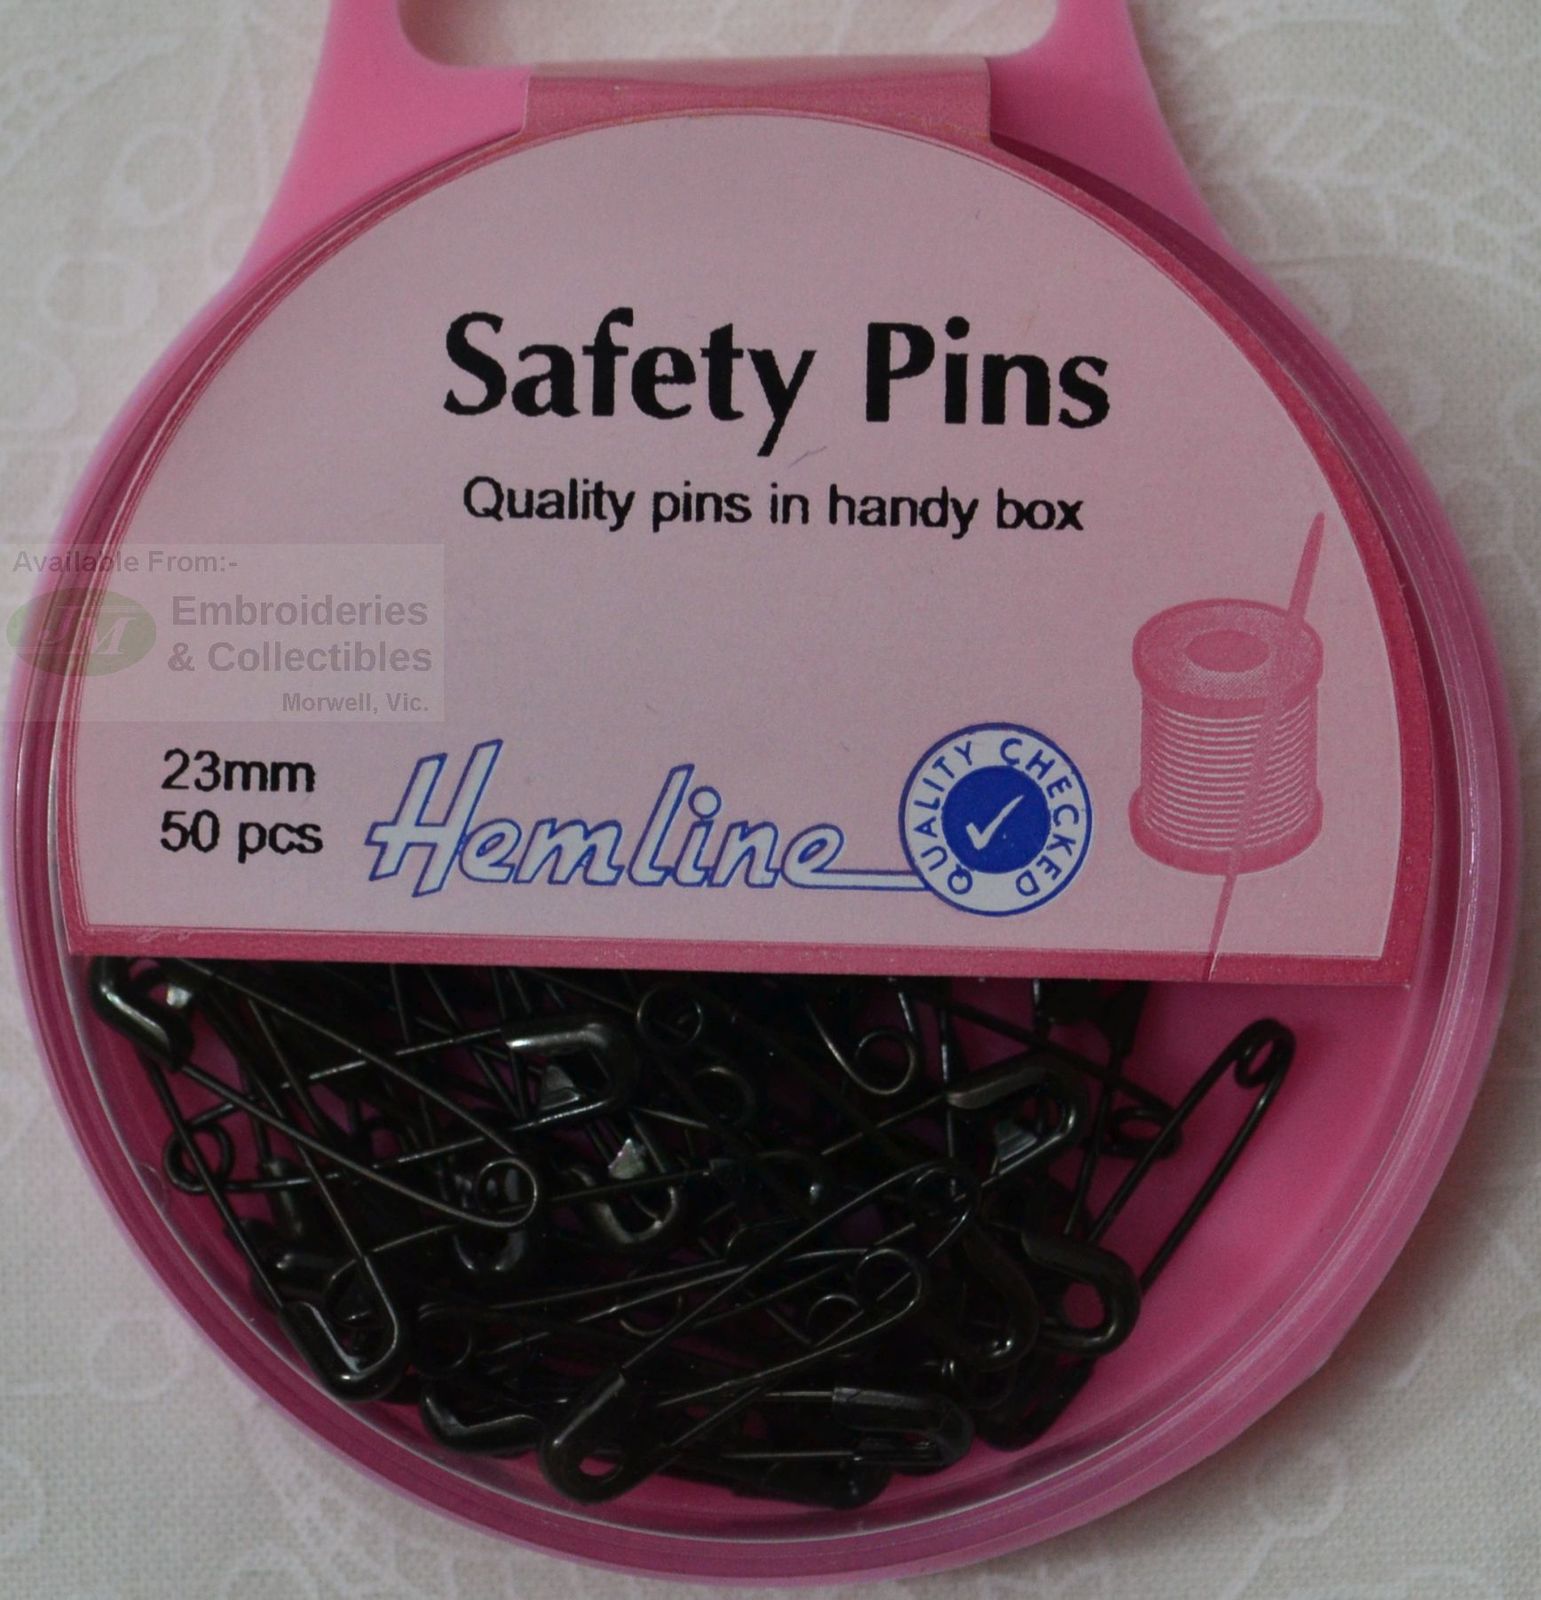 23mm 50pcs Hemline Black Safety Pins